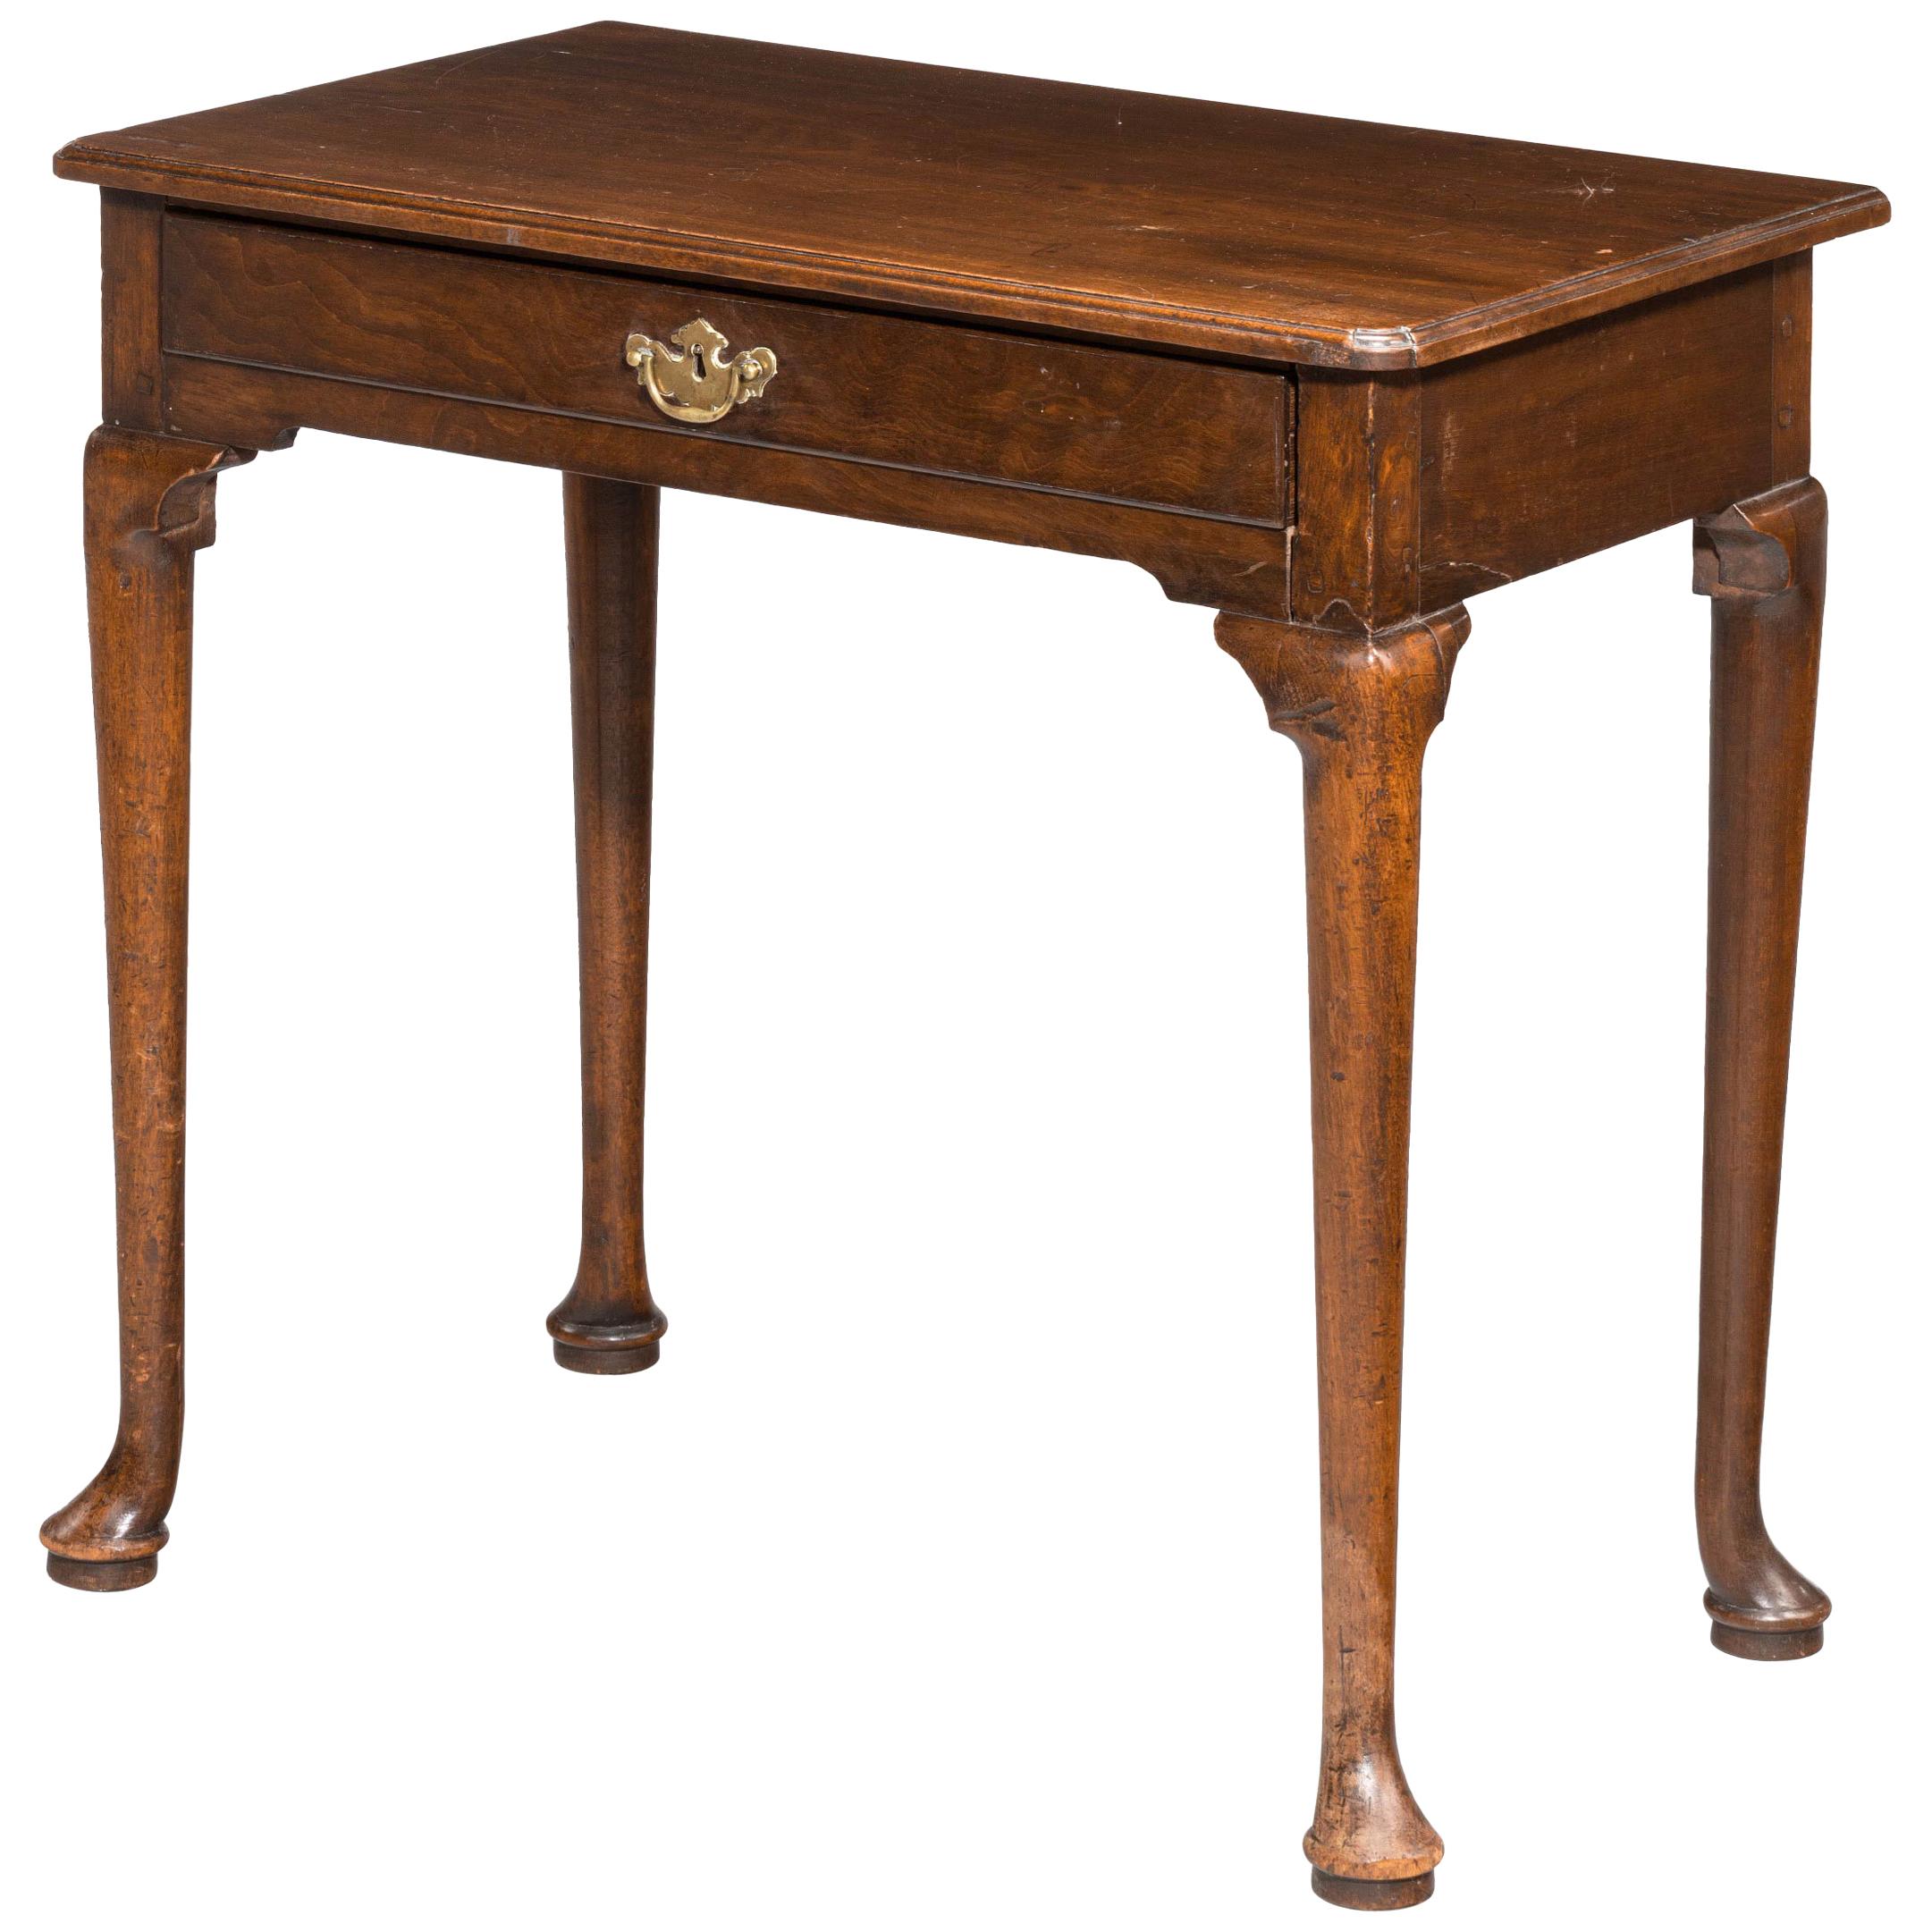 George III Period Mahogany Side Table